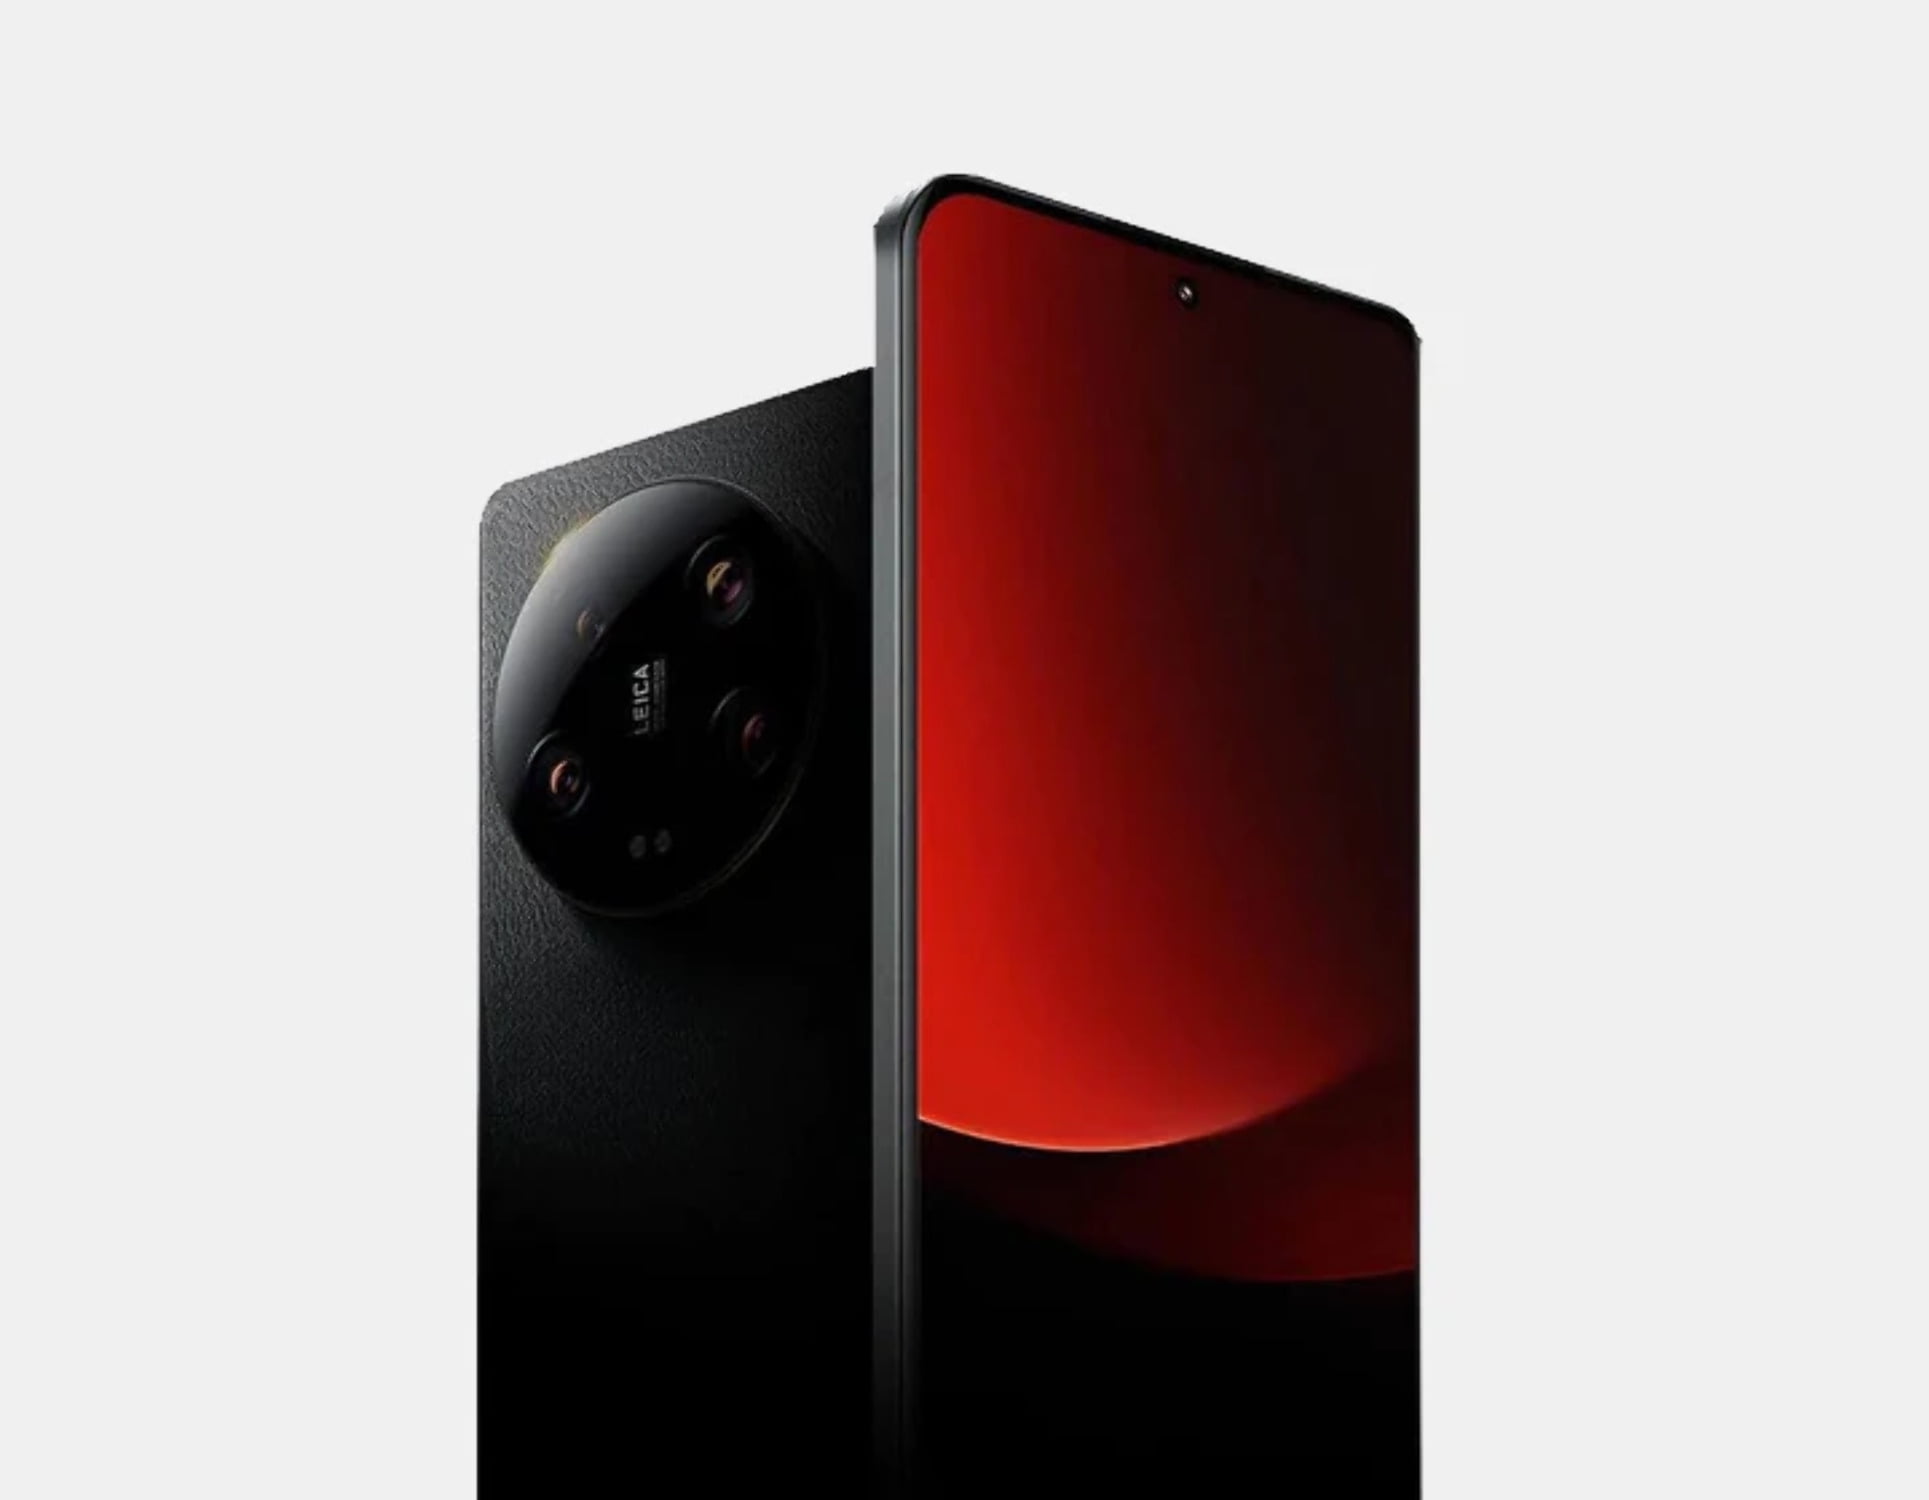 Xiaomi 13 Ultra 6,73'' 512GB Negro - Smartphone